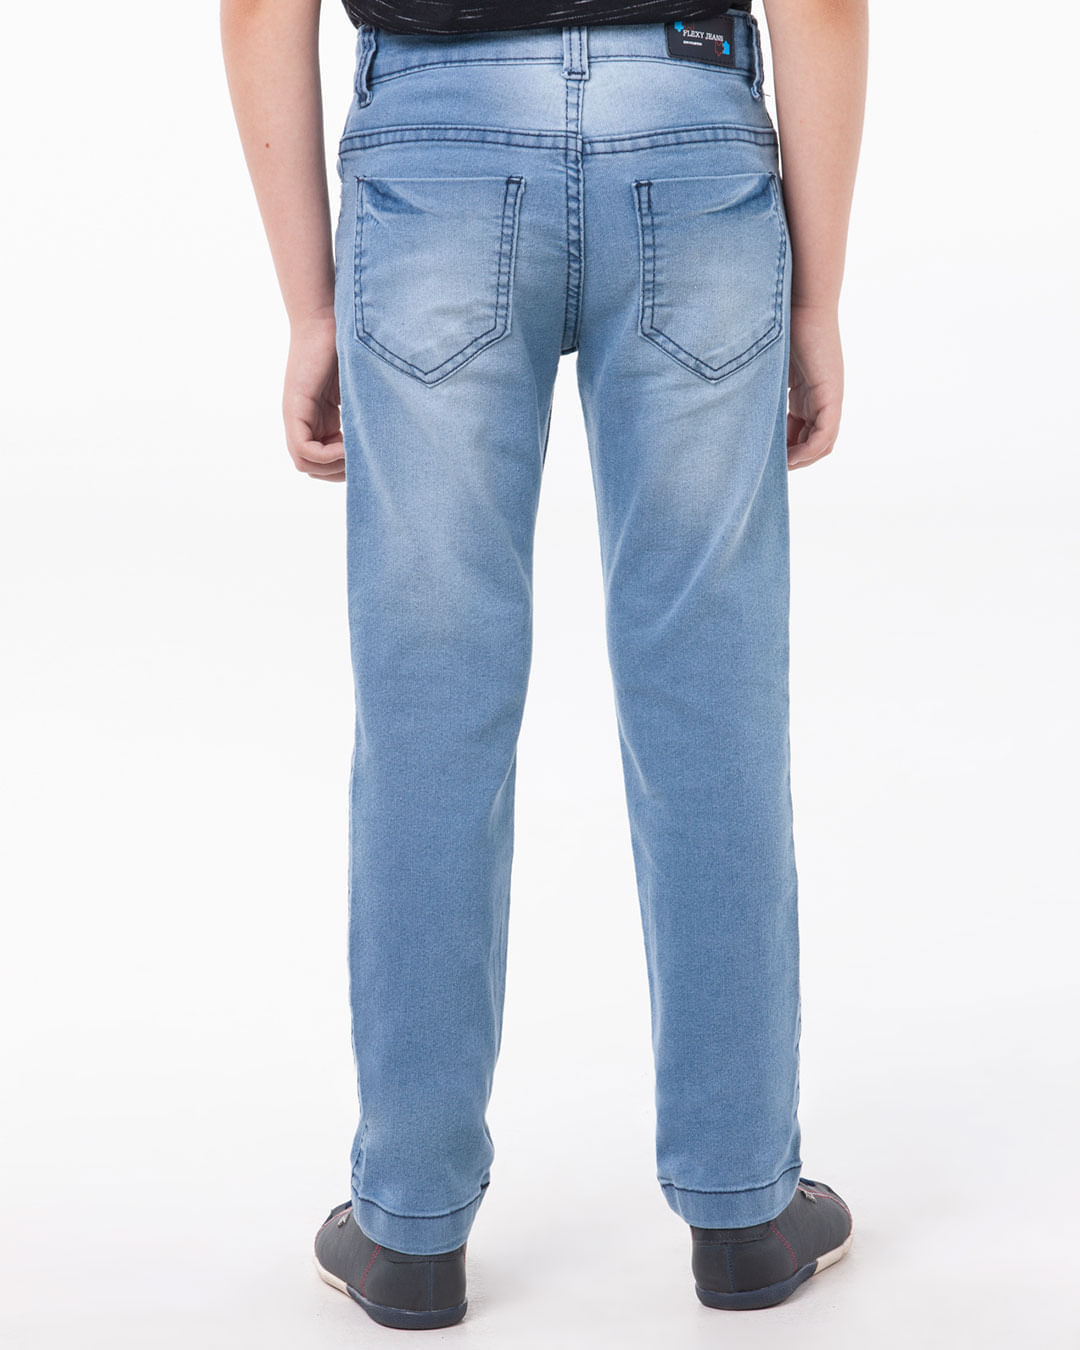 Calca-Jeans-Infantil-Delave-Azul